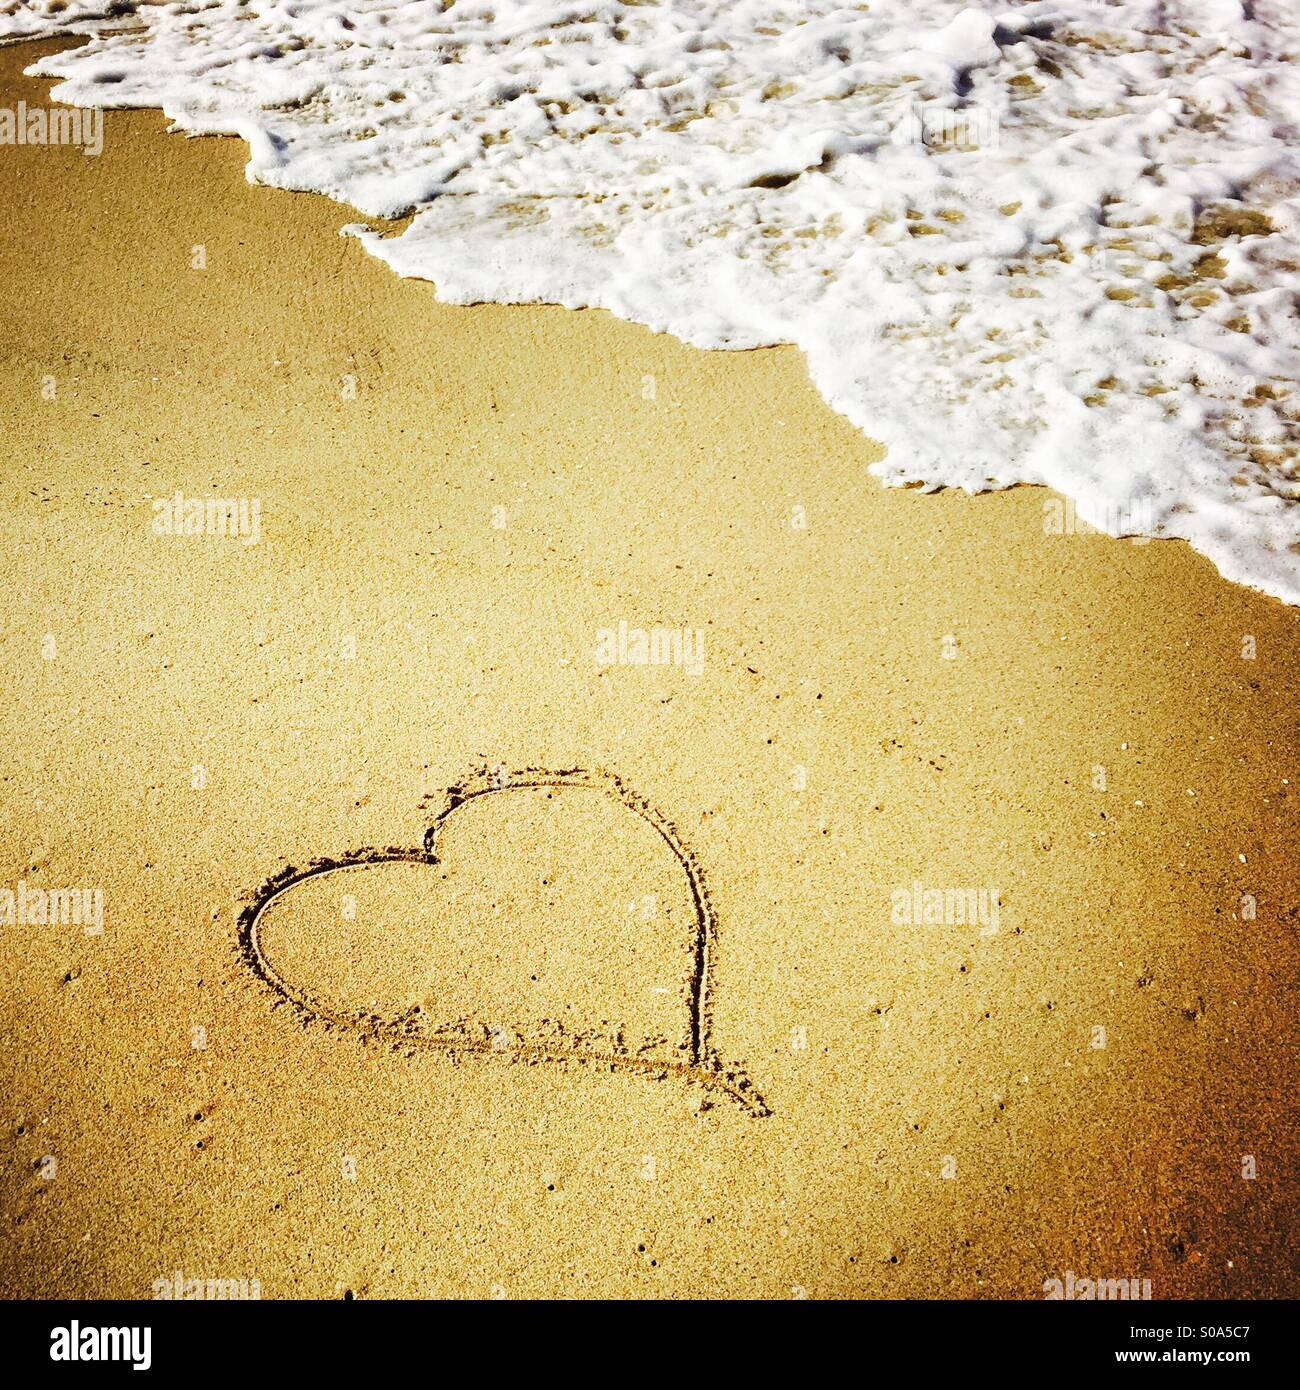 A heart drawn in the sand at the shoreline. Manhattan Beach, California USA. Stock Photo